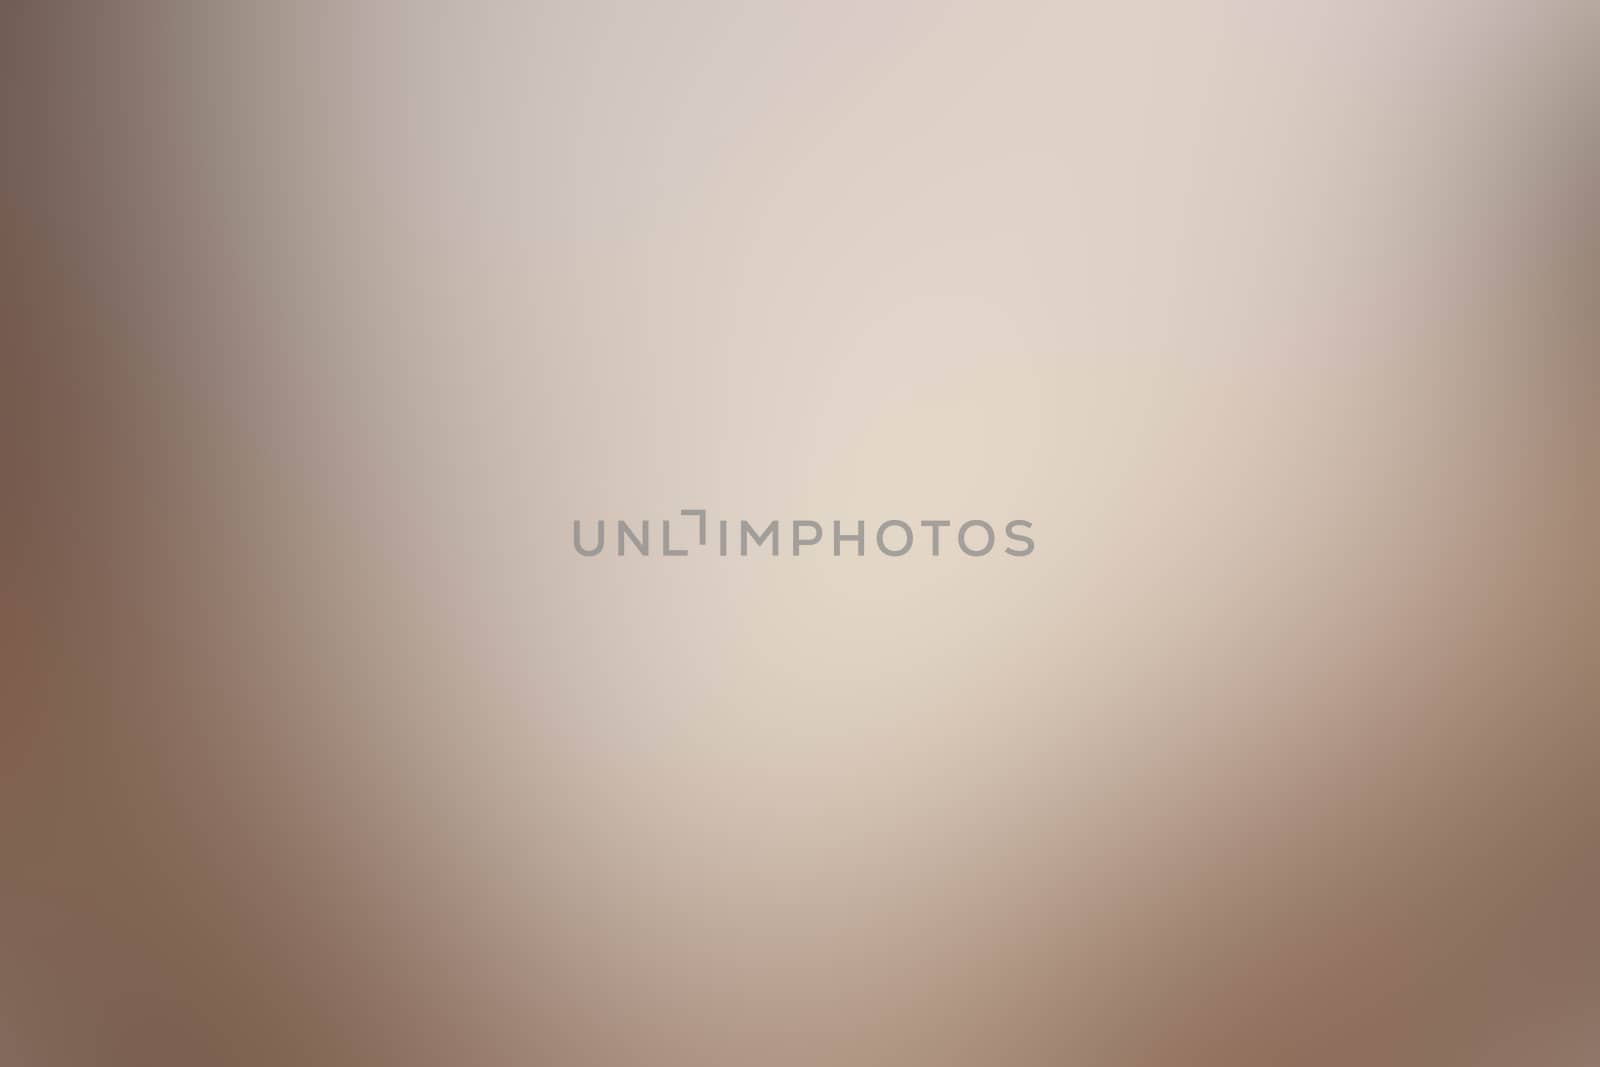 Background blurred brown soft tone